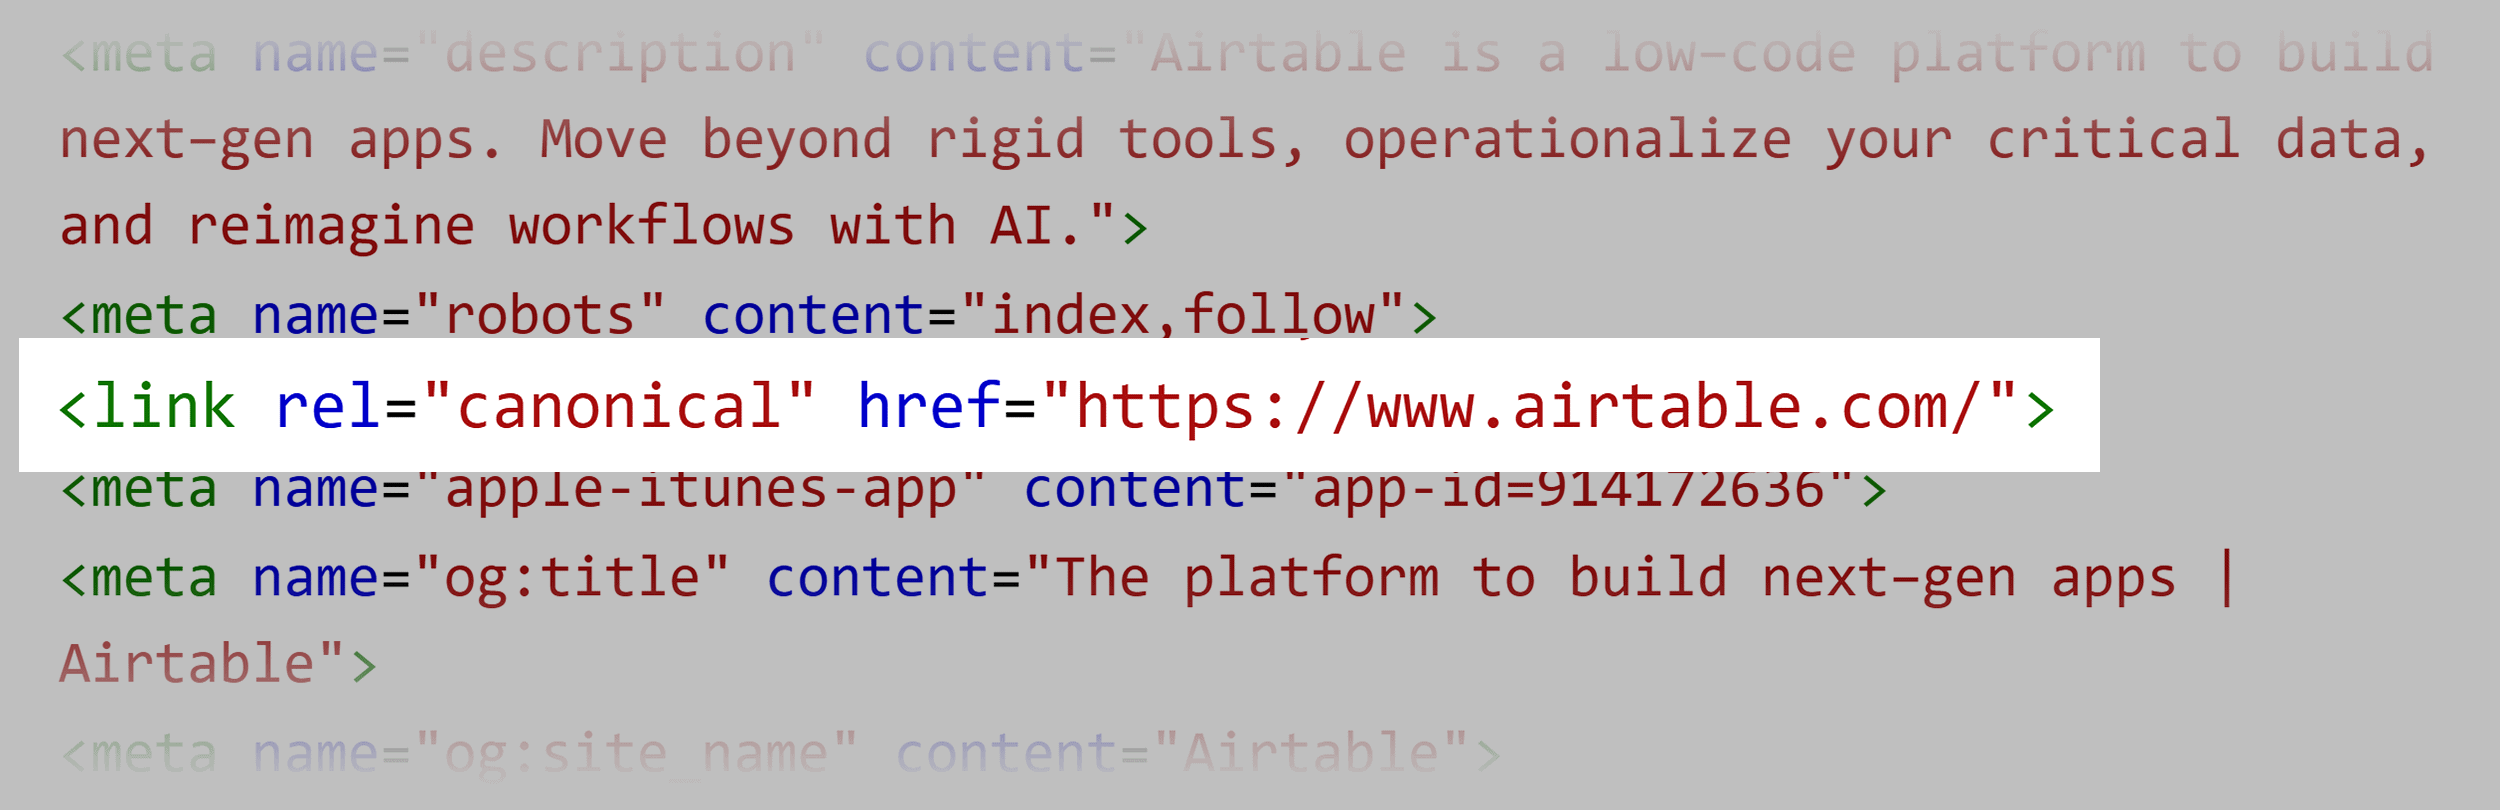 Airtable – Canonical URL